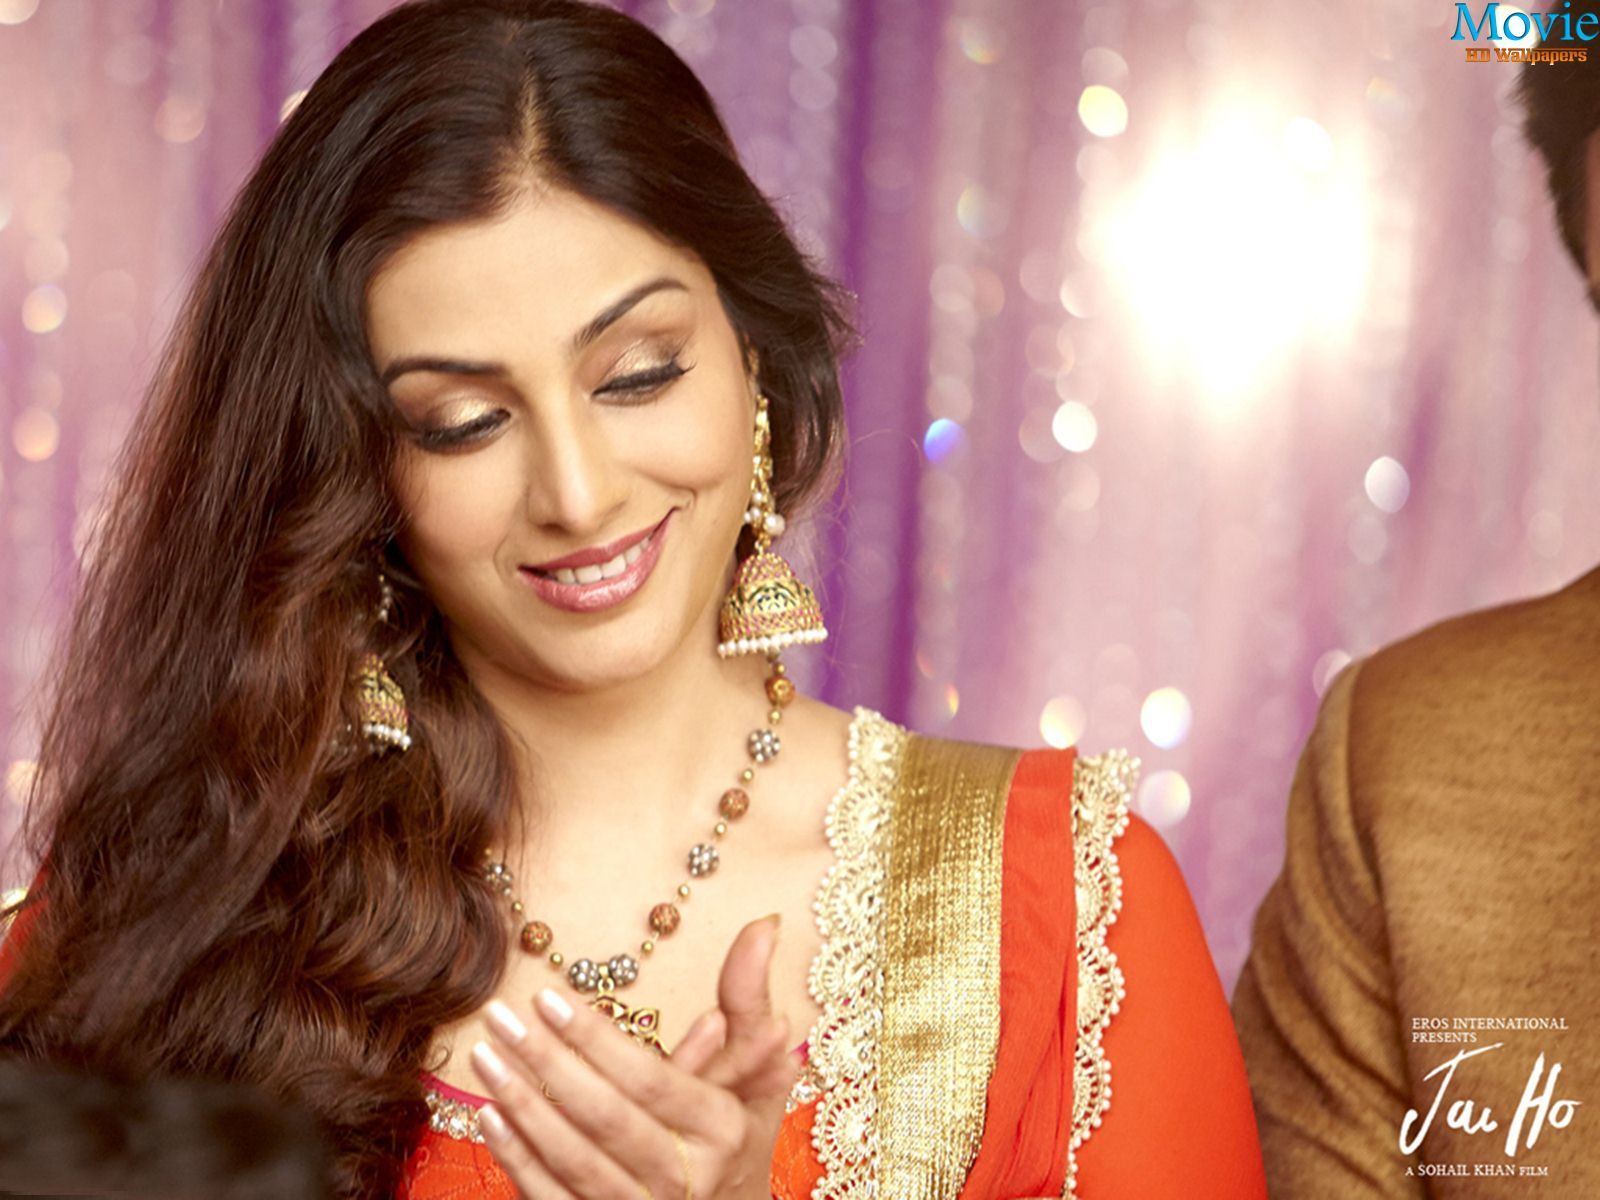 Jai Ho 2014 Hindi Movie Wallpapers Movie HD Backgrounds